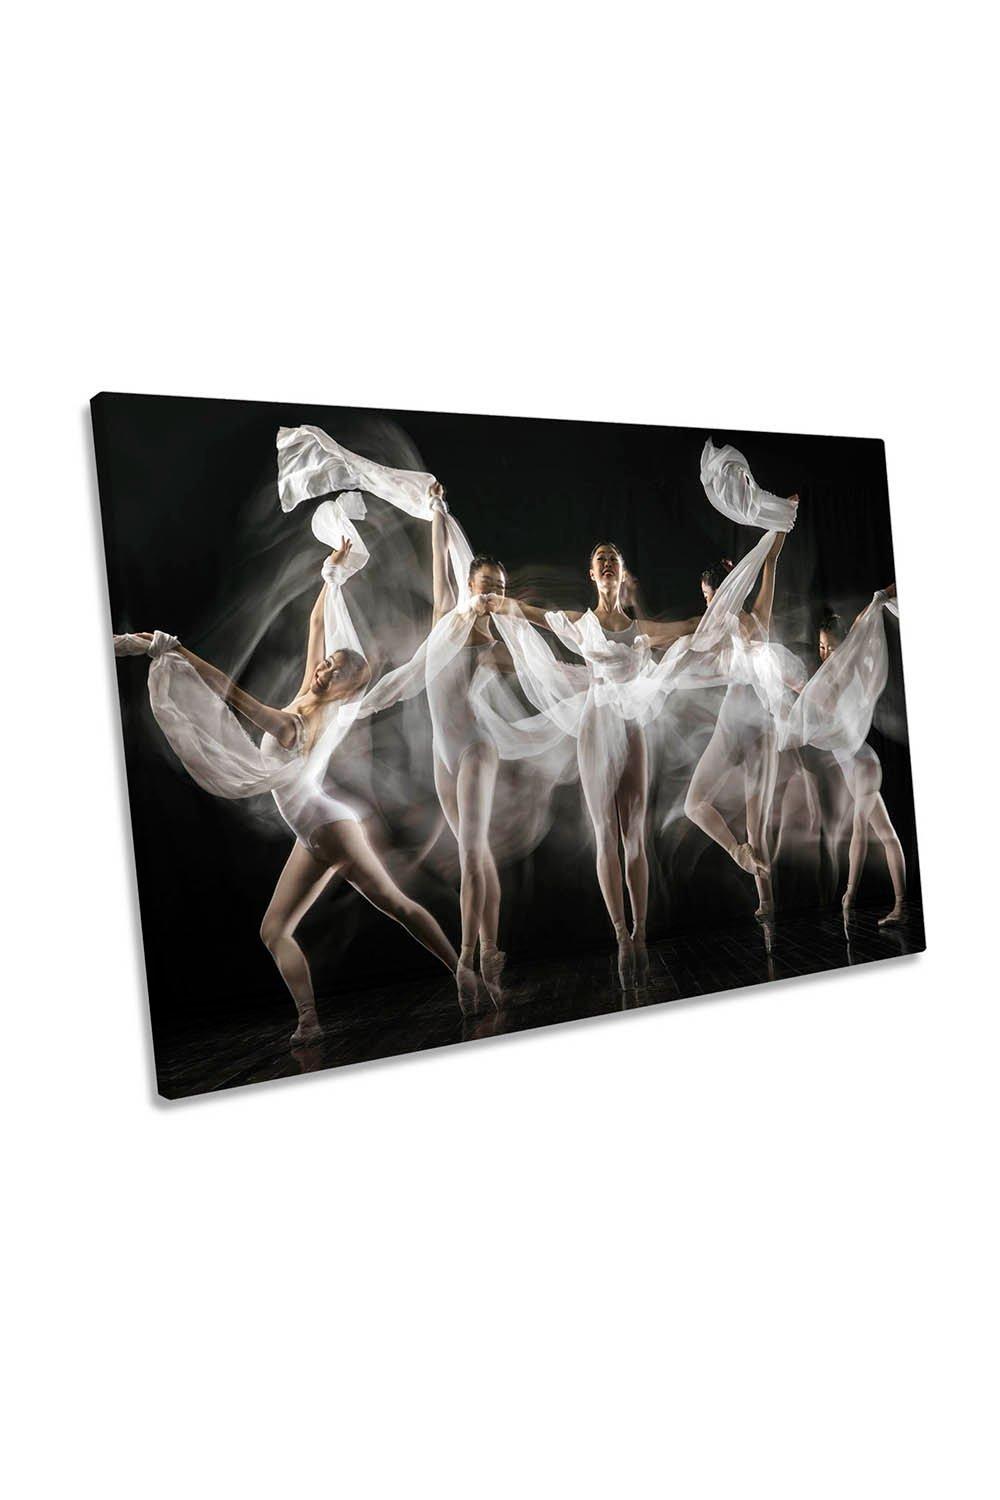 Ballerina Story Dancer Performance Canvas Wall Art Picture Print